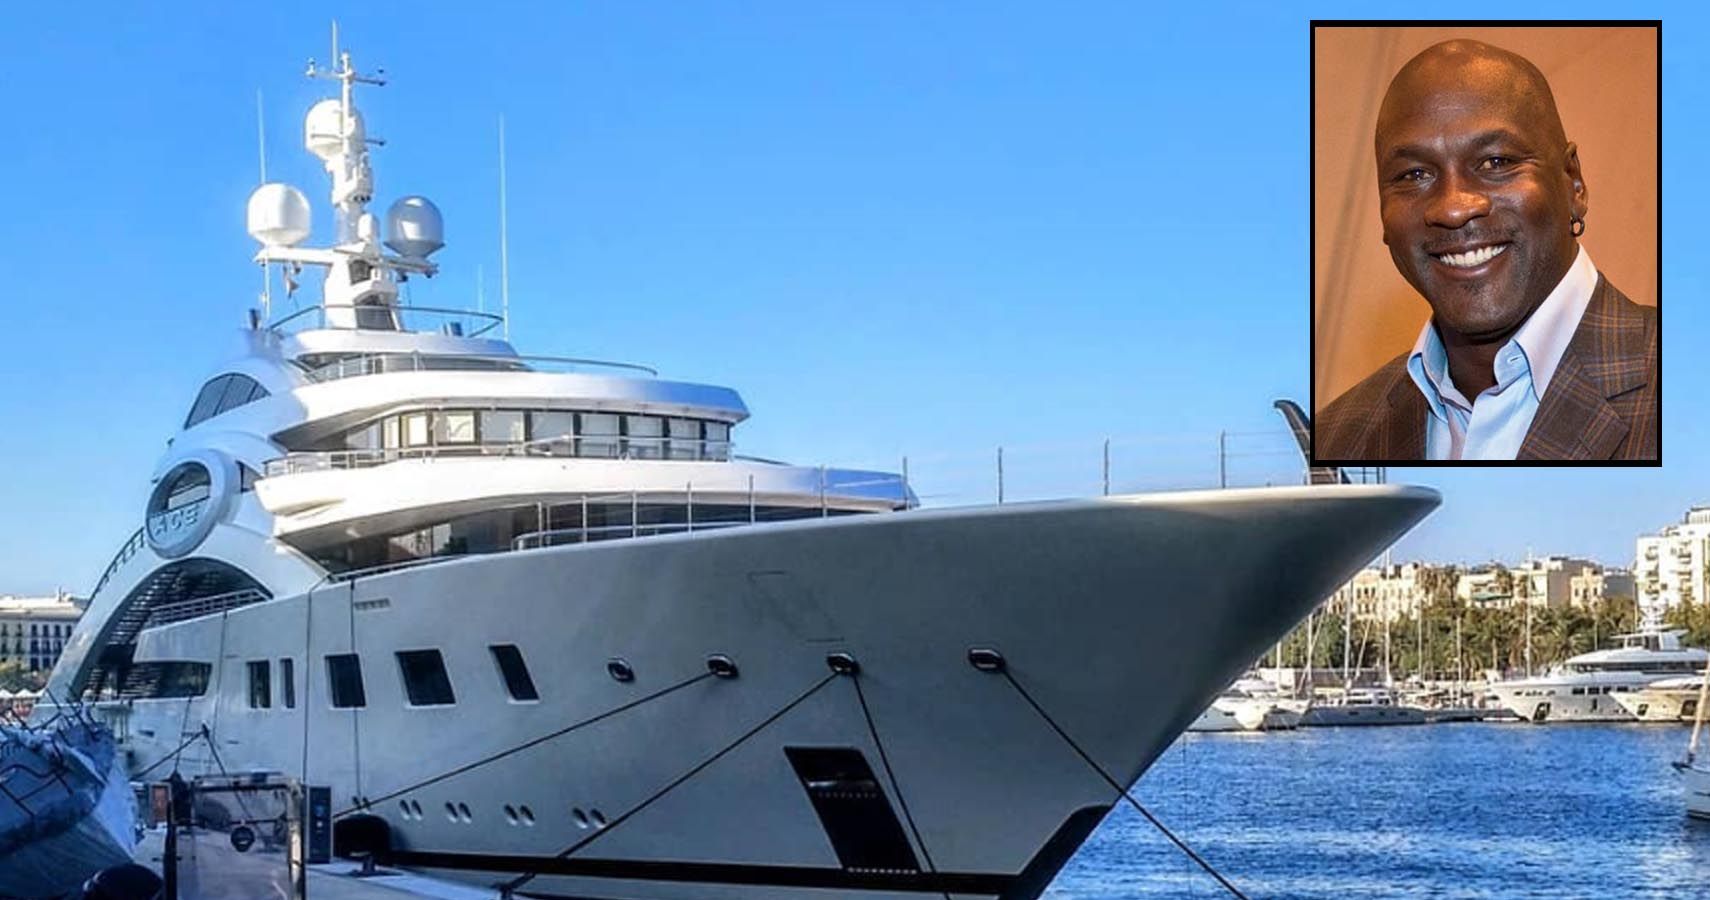 mj 80 million dollar yacht